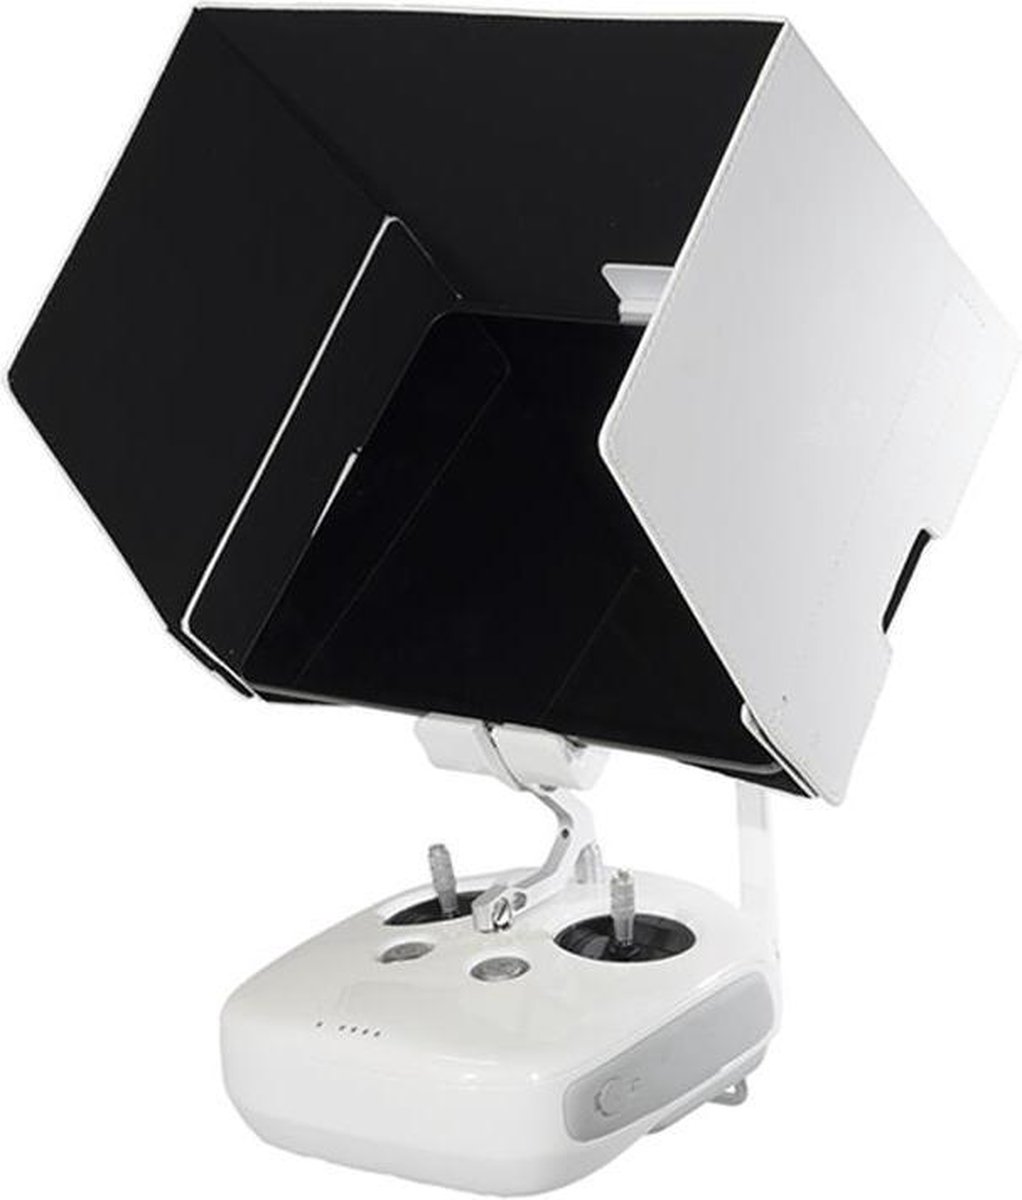 PolarPro DJI Remote Sunshade voor tablet